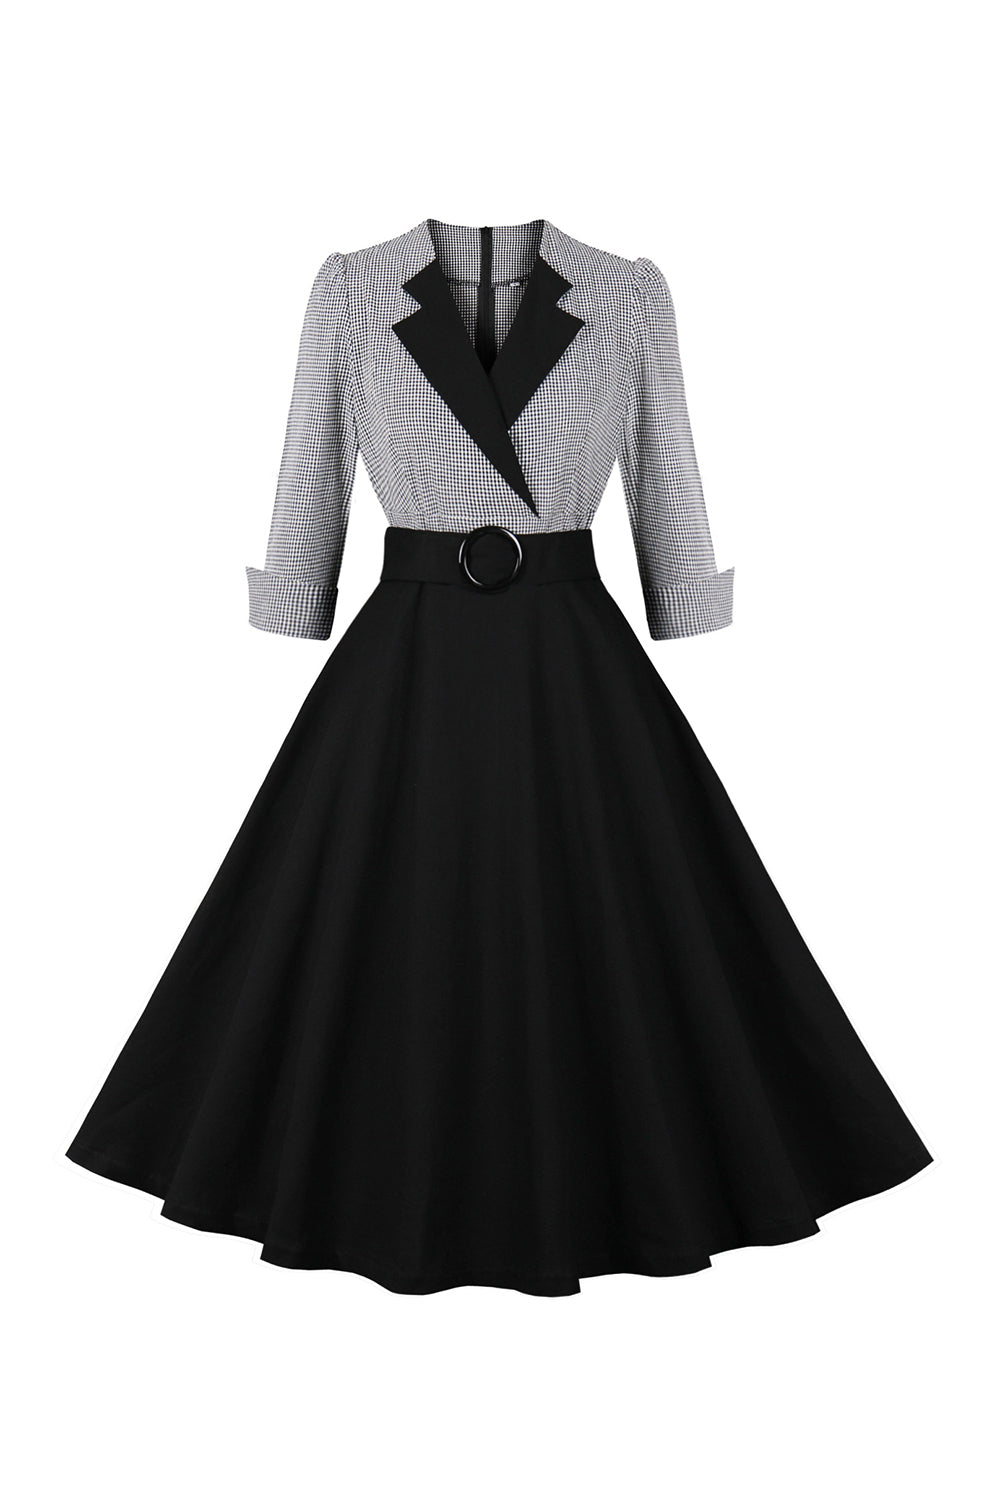 Lange mouwen Plaid Swing 1950s jurk met riem